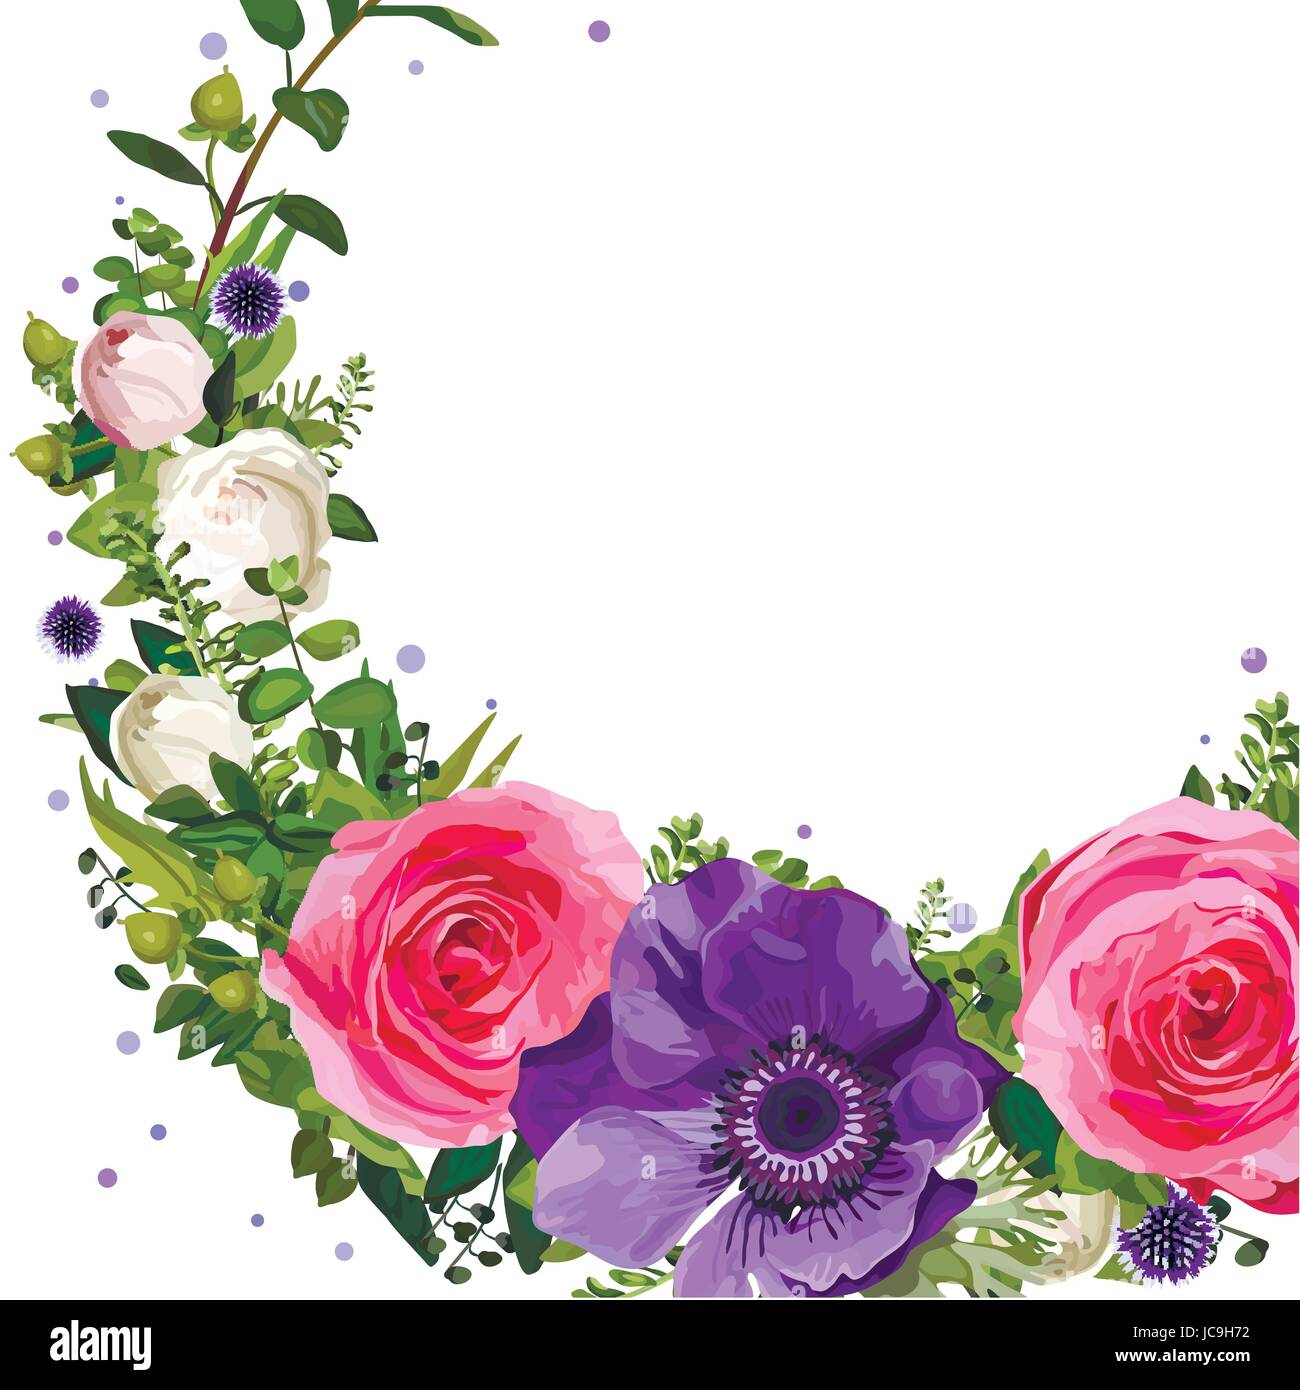 Blumen Kranz Anemone rosa Rose Distel schöne schönen Frühling Sommer Bouquet Vektor Illustration Draufsicht quadratisch eleganter lässt Aquarell Design Gr Stock Vektor